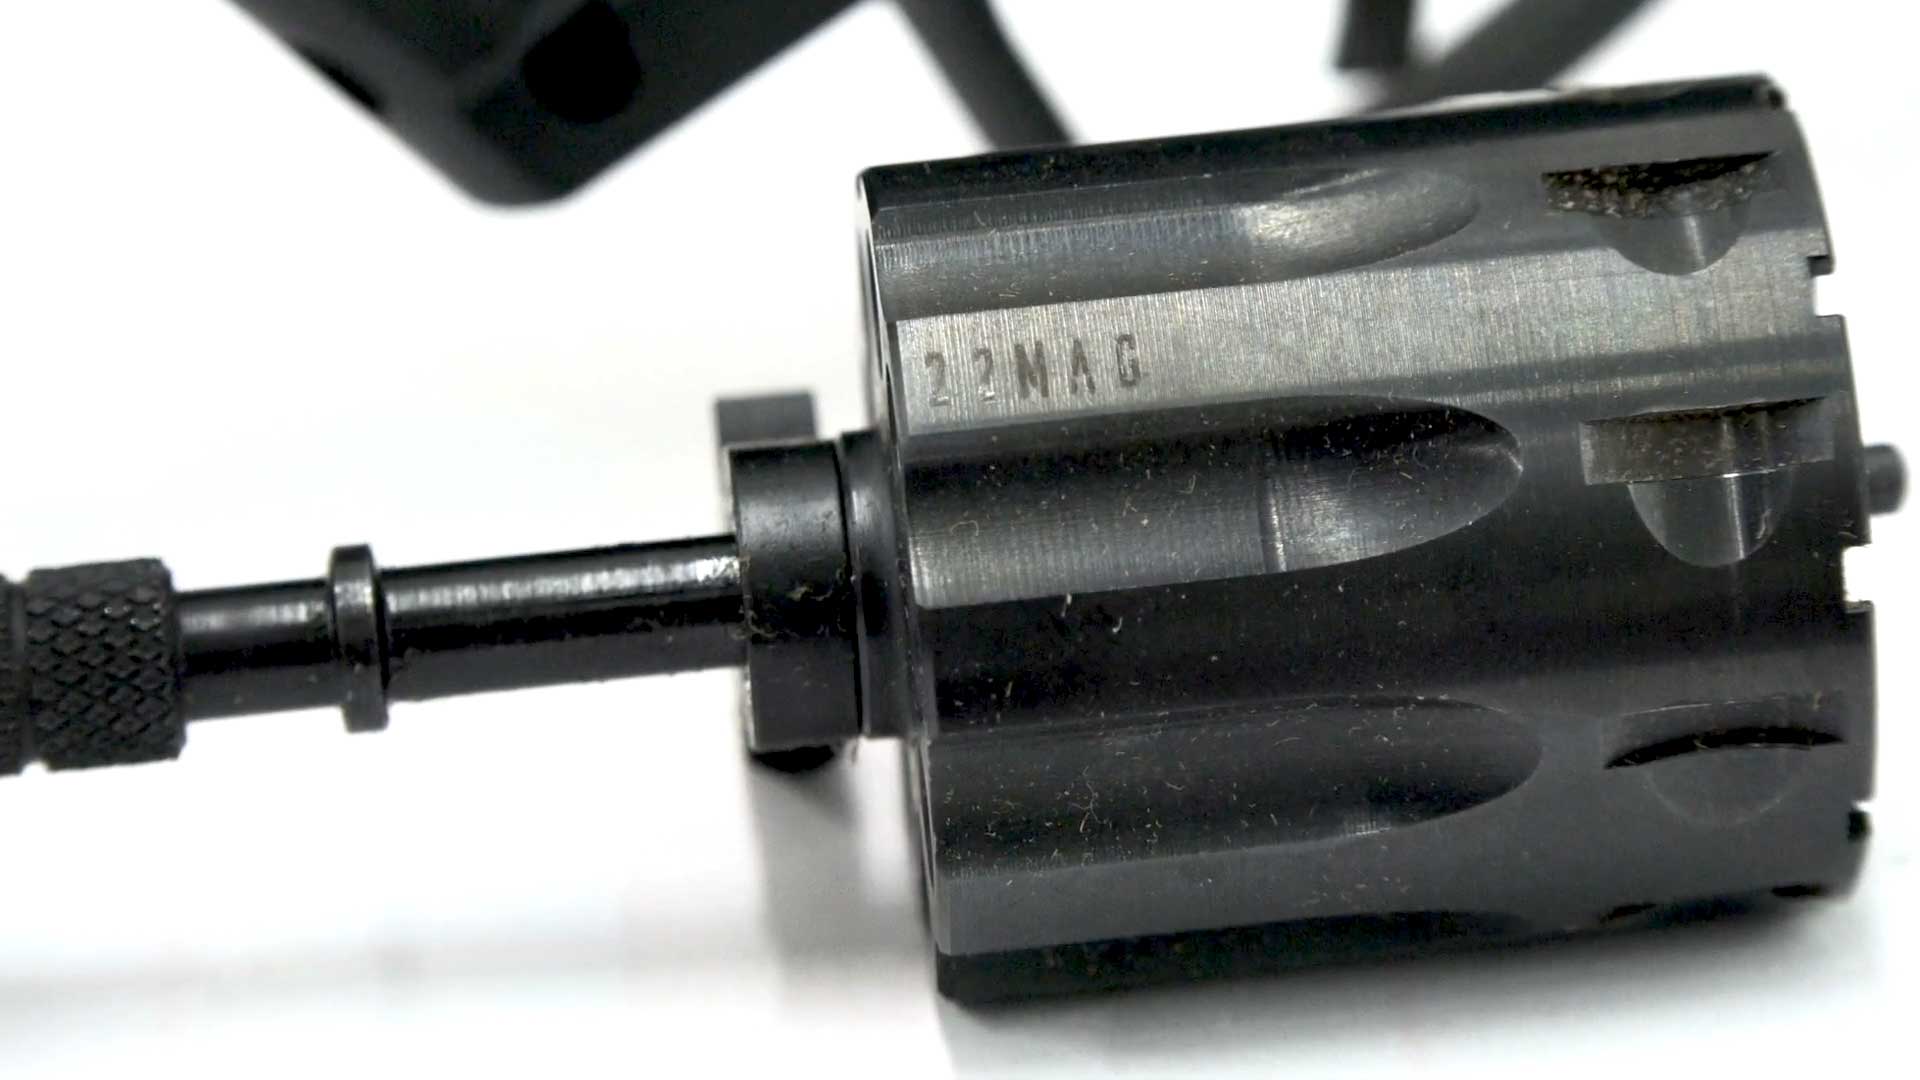 black metal cylinder revolver parts closeup image .22 WMR rimfire magnum conversion